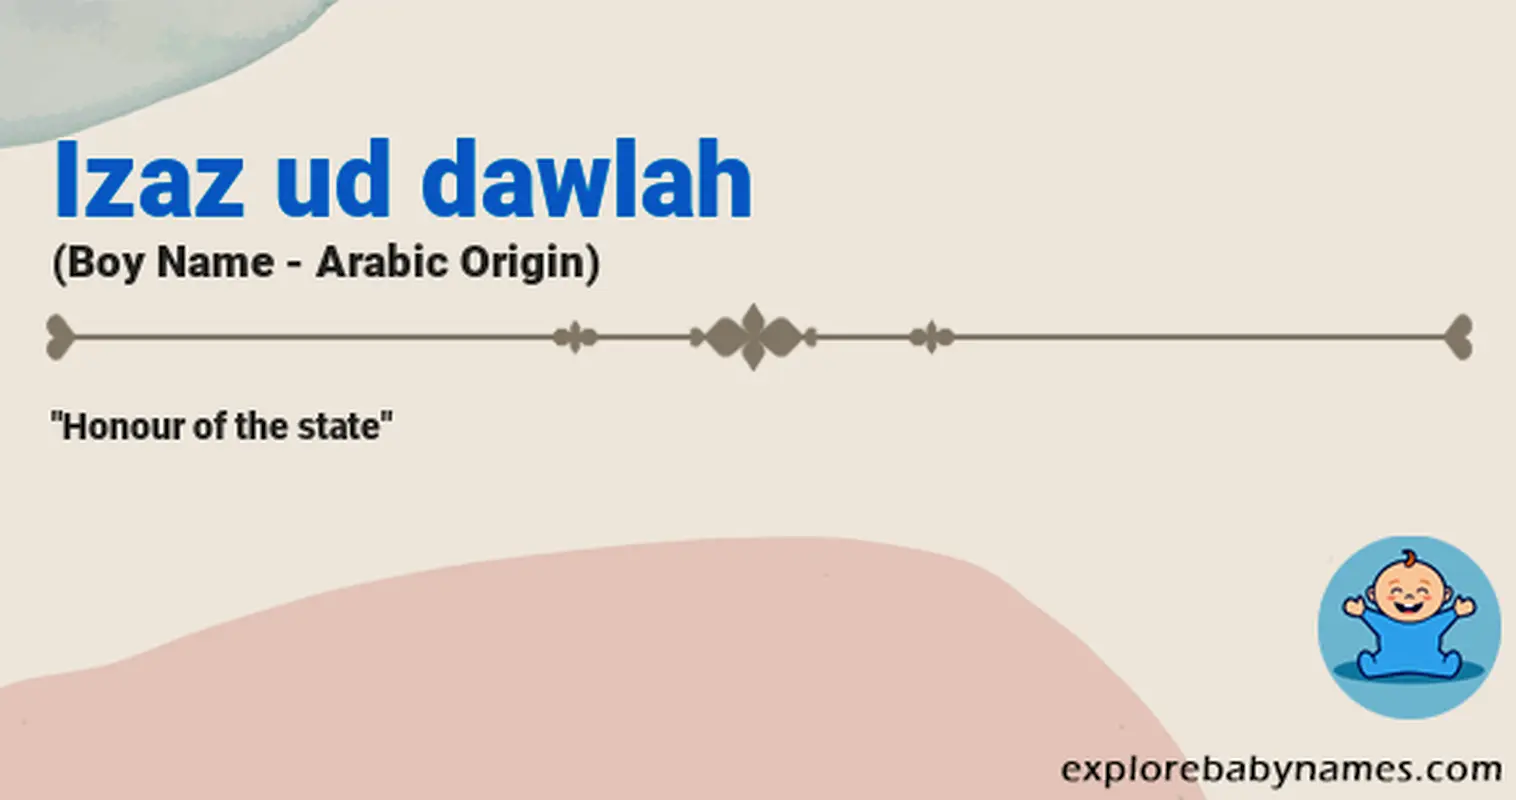 Meaning of Izaz ud dawlah